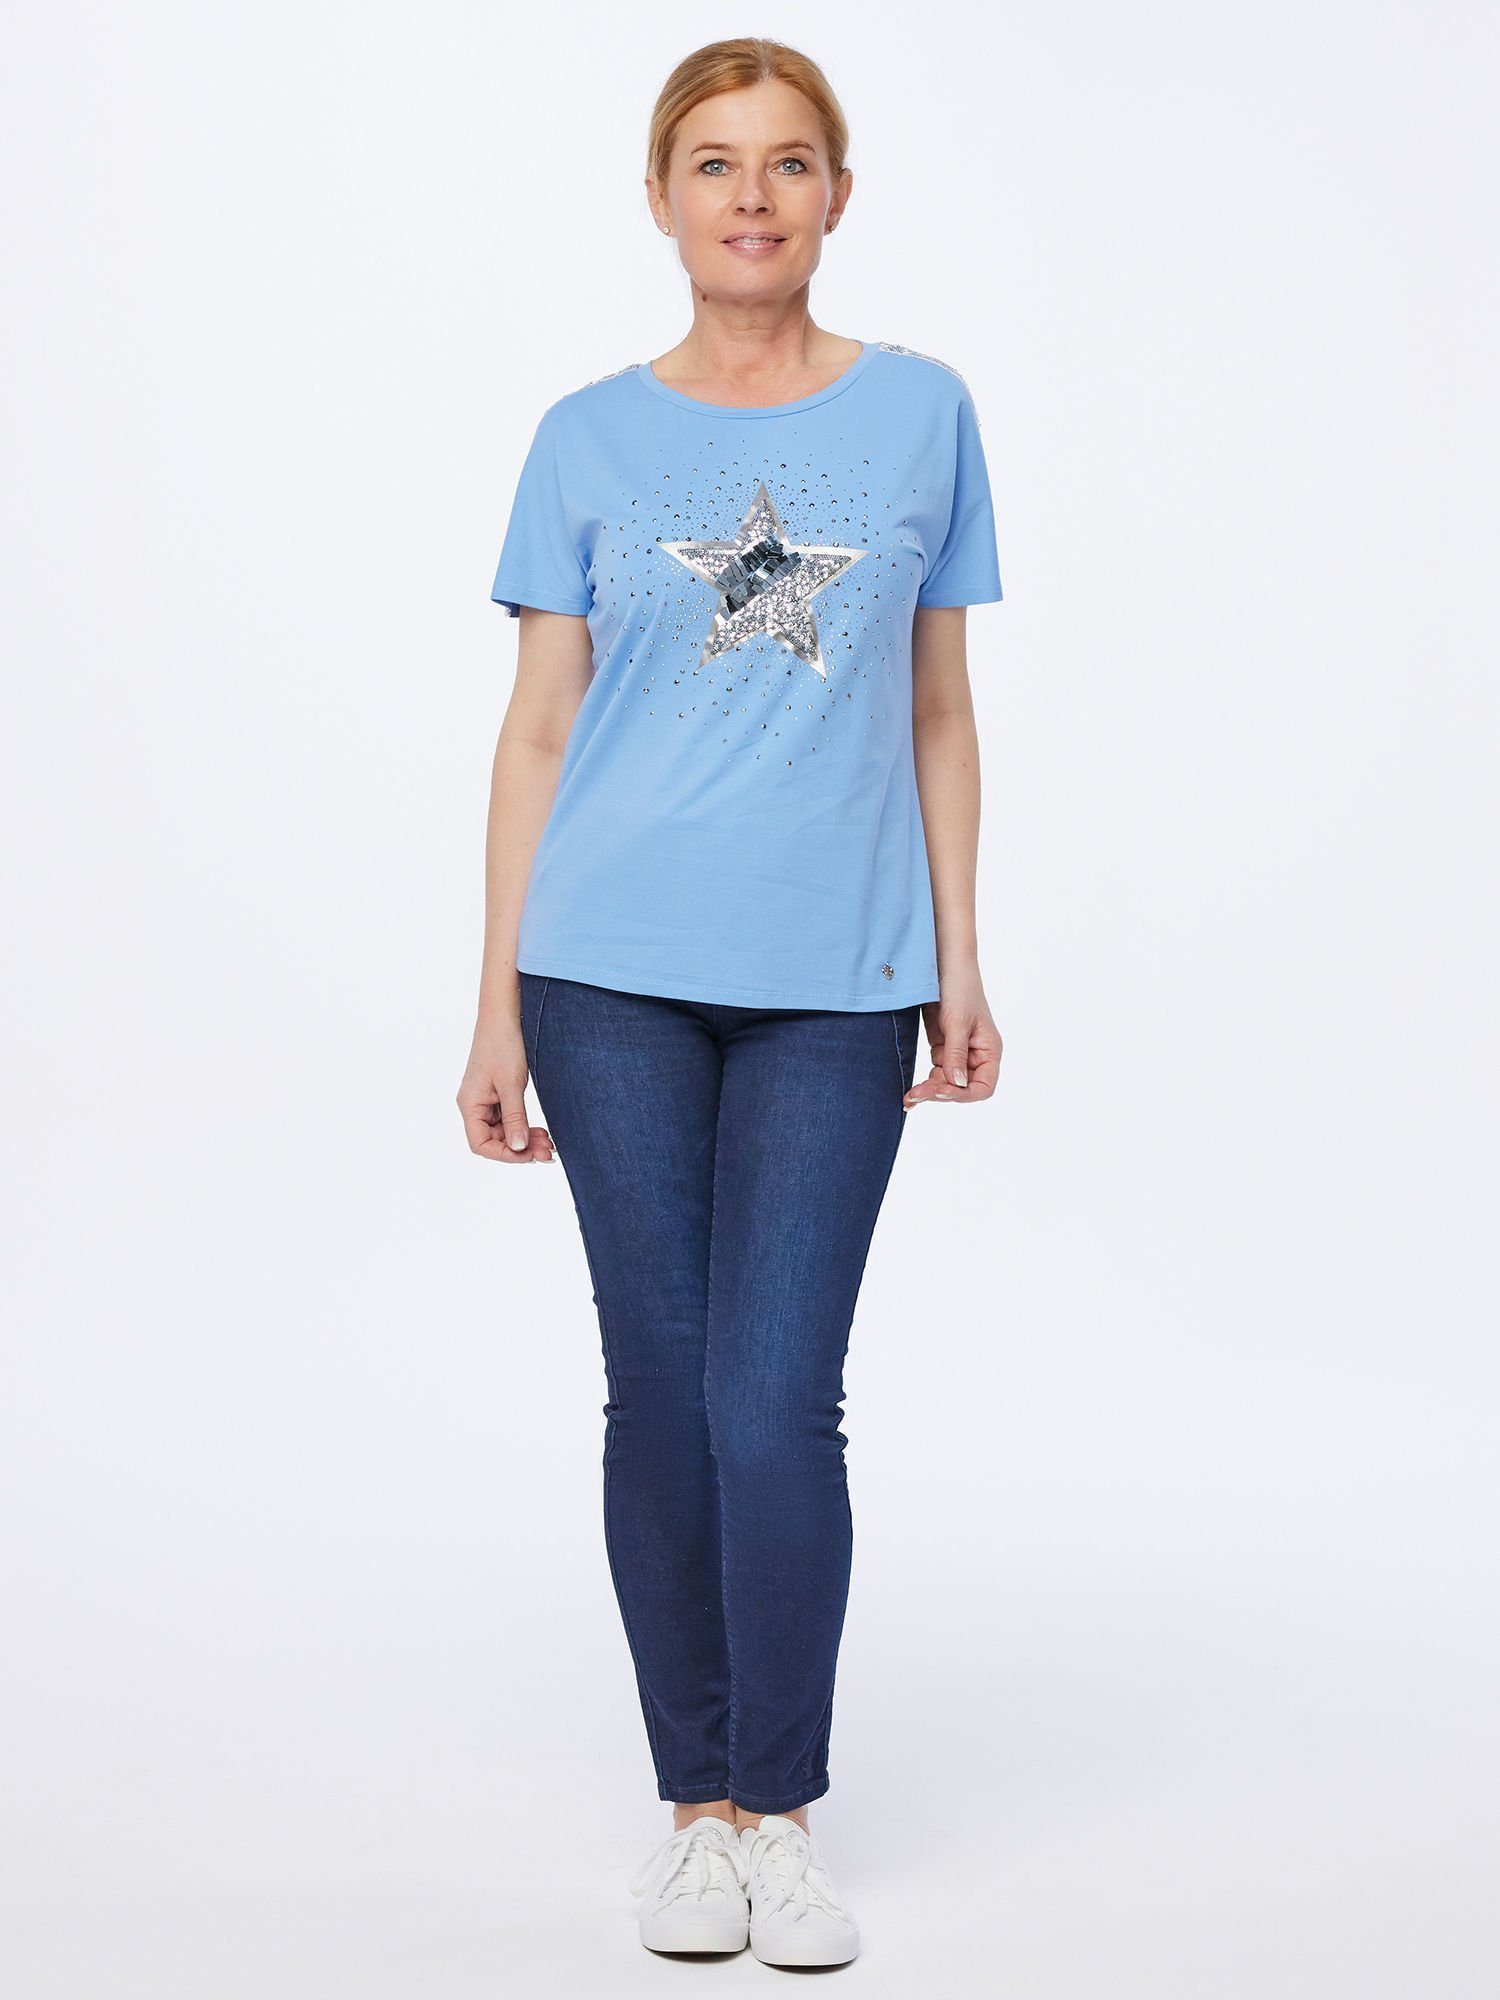 T-Shirt Stern-Motiv Kurzarmbluse Materne Christian blau mit